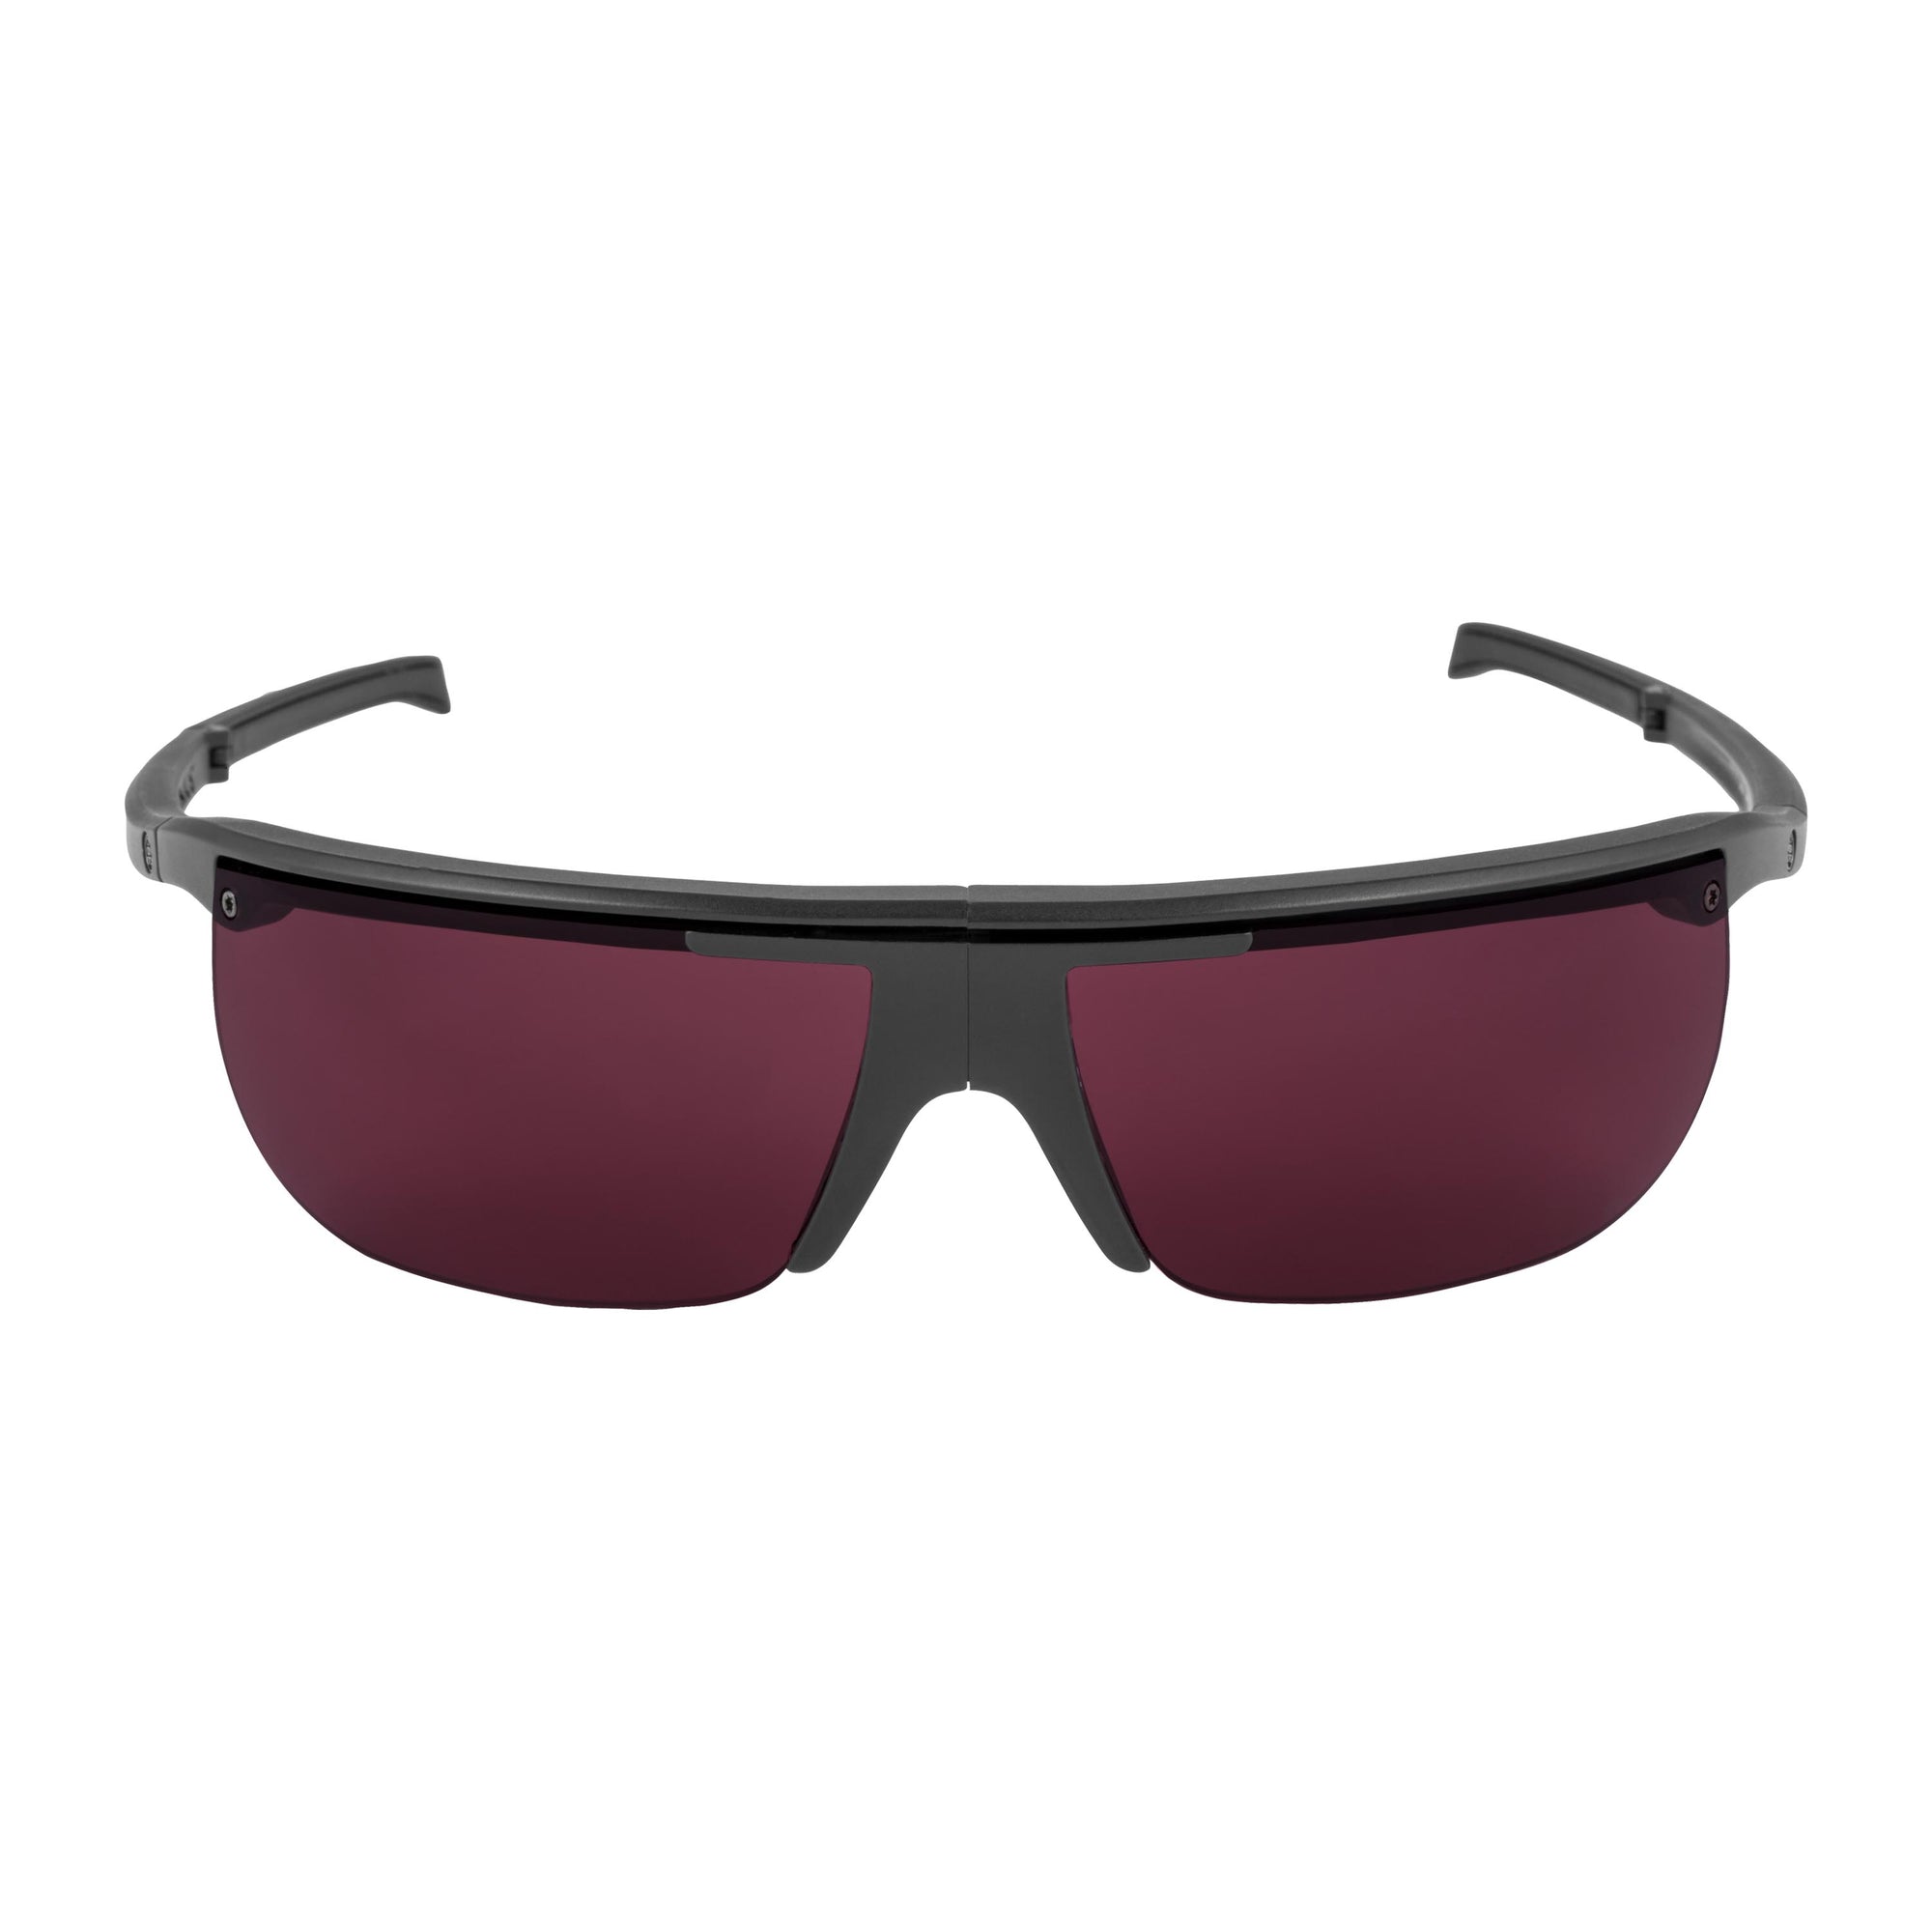 Popticals, Premium Compact Sunglasses, PopArt, 200030-BMPS, Standard Golf Sunglasses, Matte Black Frame, Purple Golf Lenses, Glam View